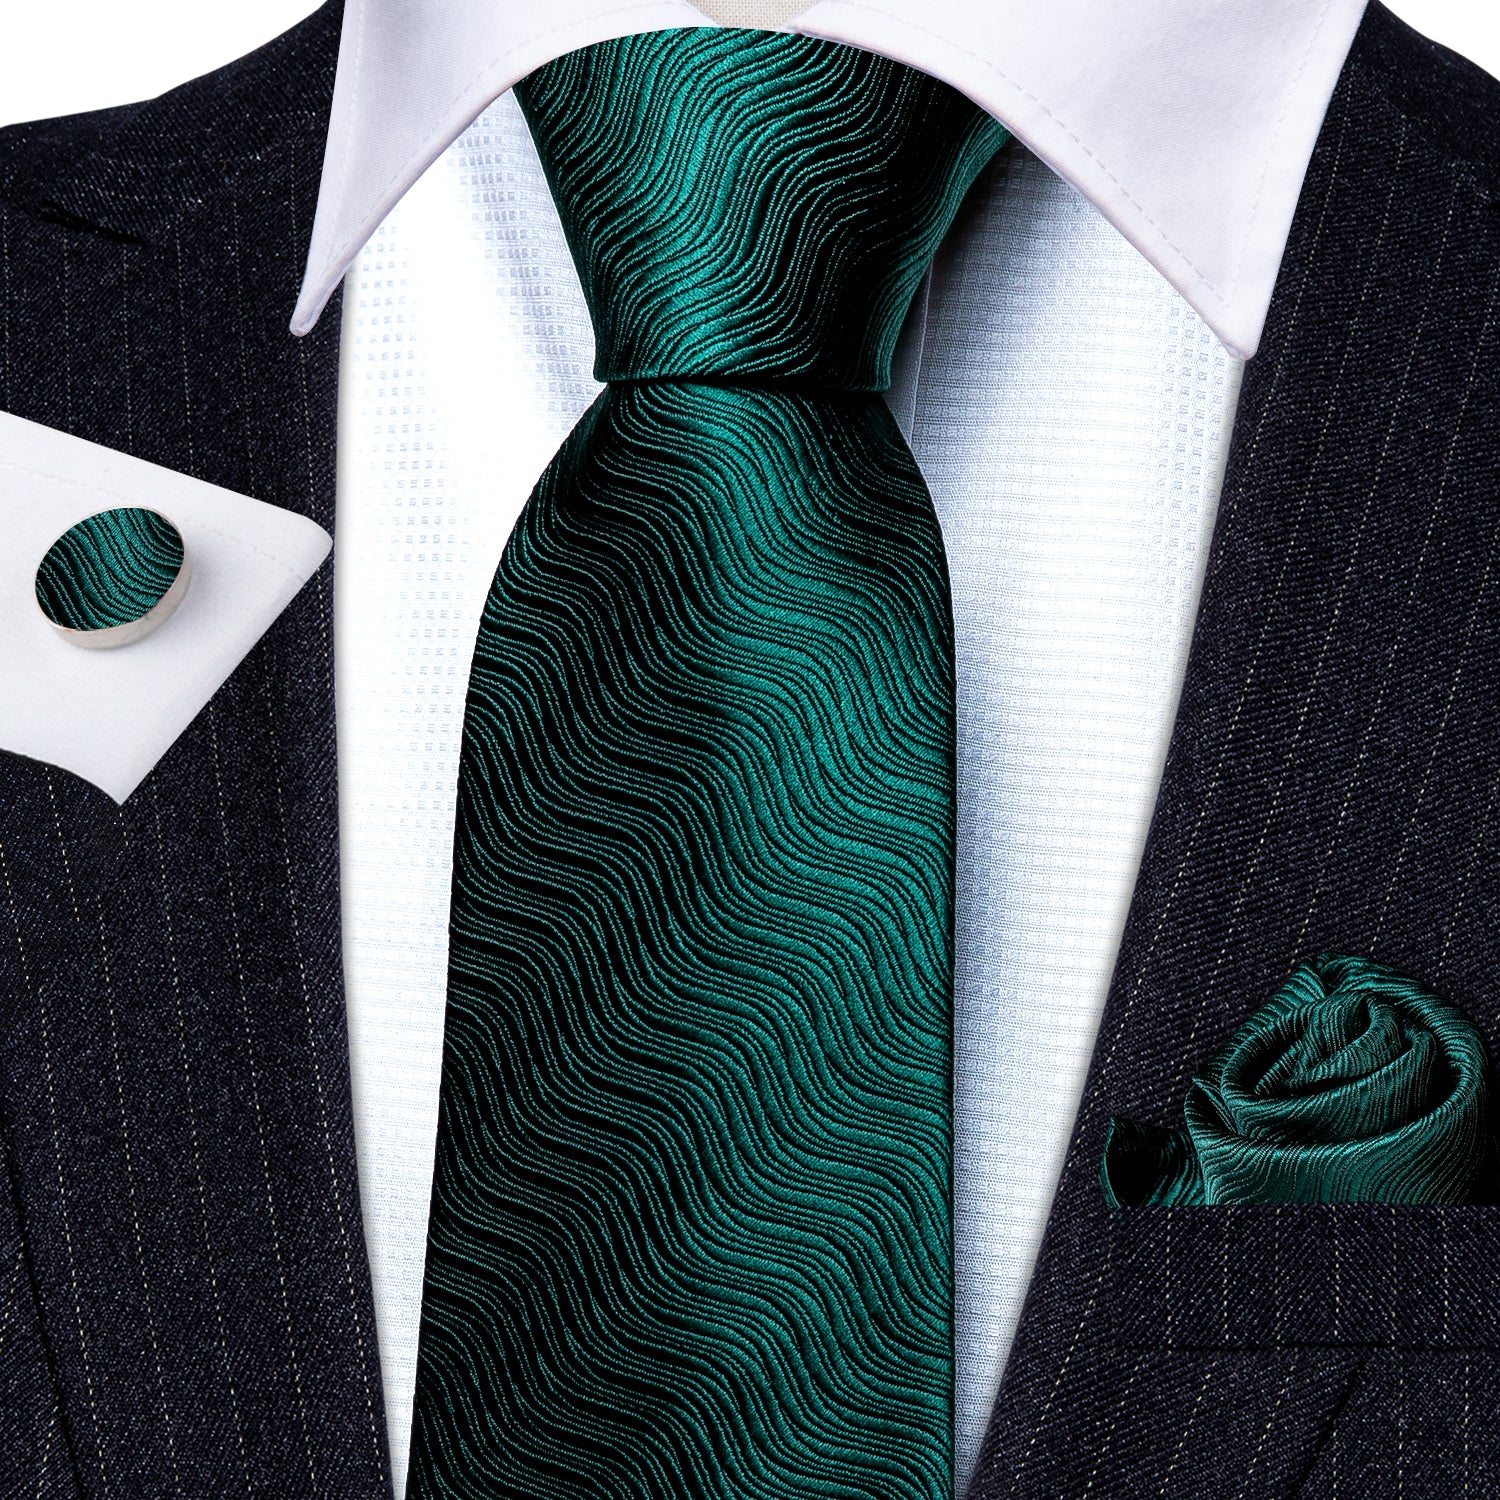 Barry Wang Green Tie Geometric Solid Silk Necktie Hanky Cufflinks Tie Clip Set